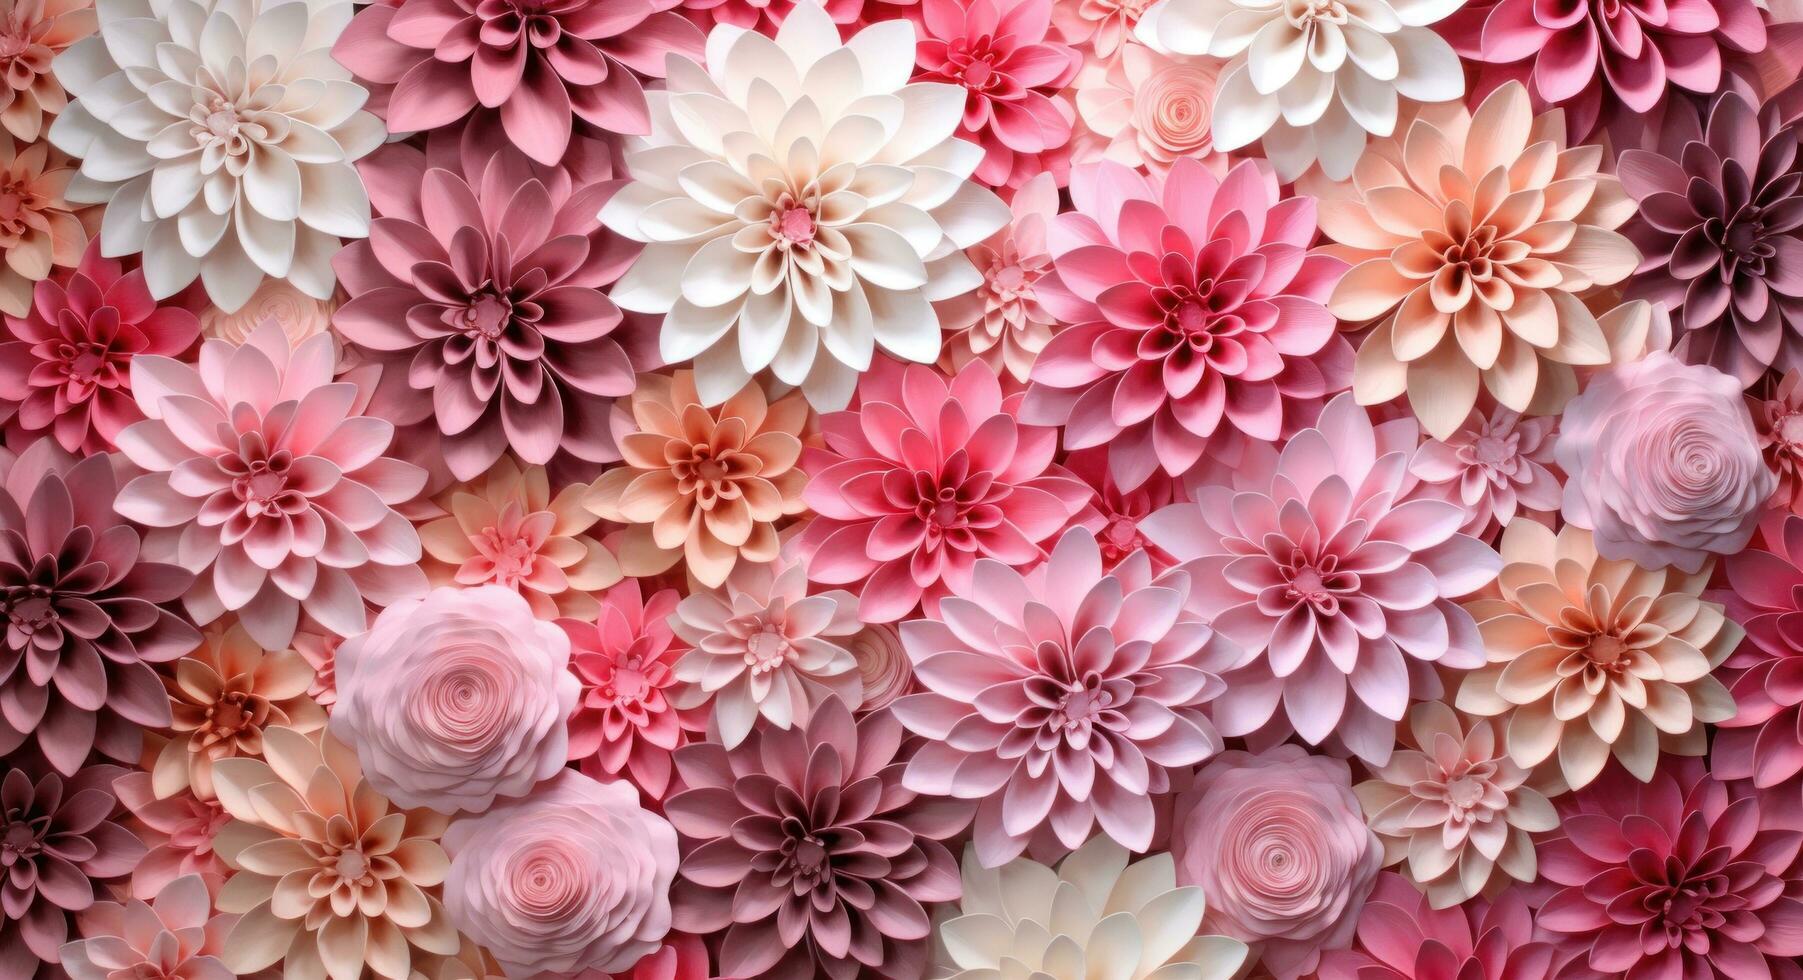 ai genererad stor siffra av rosa blommor foto